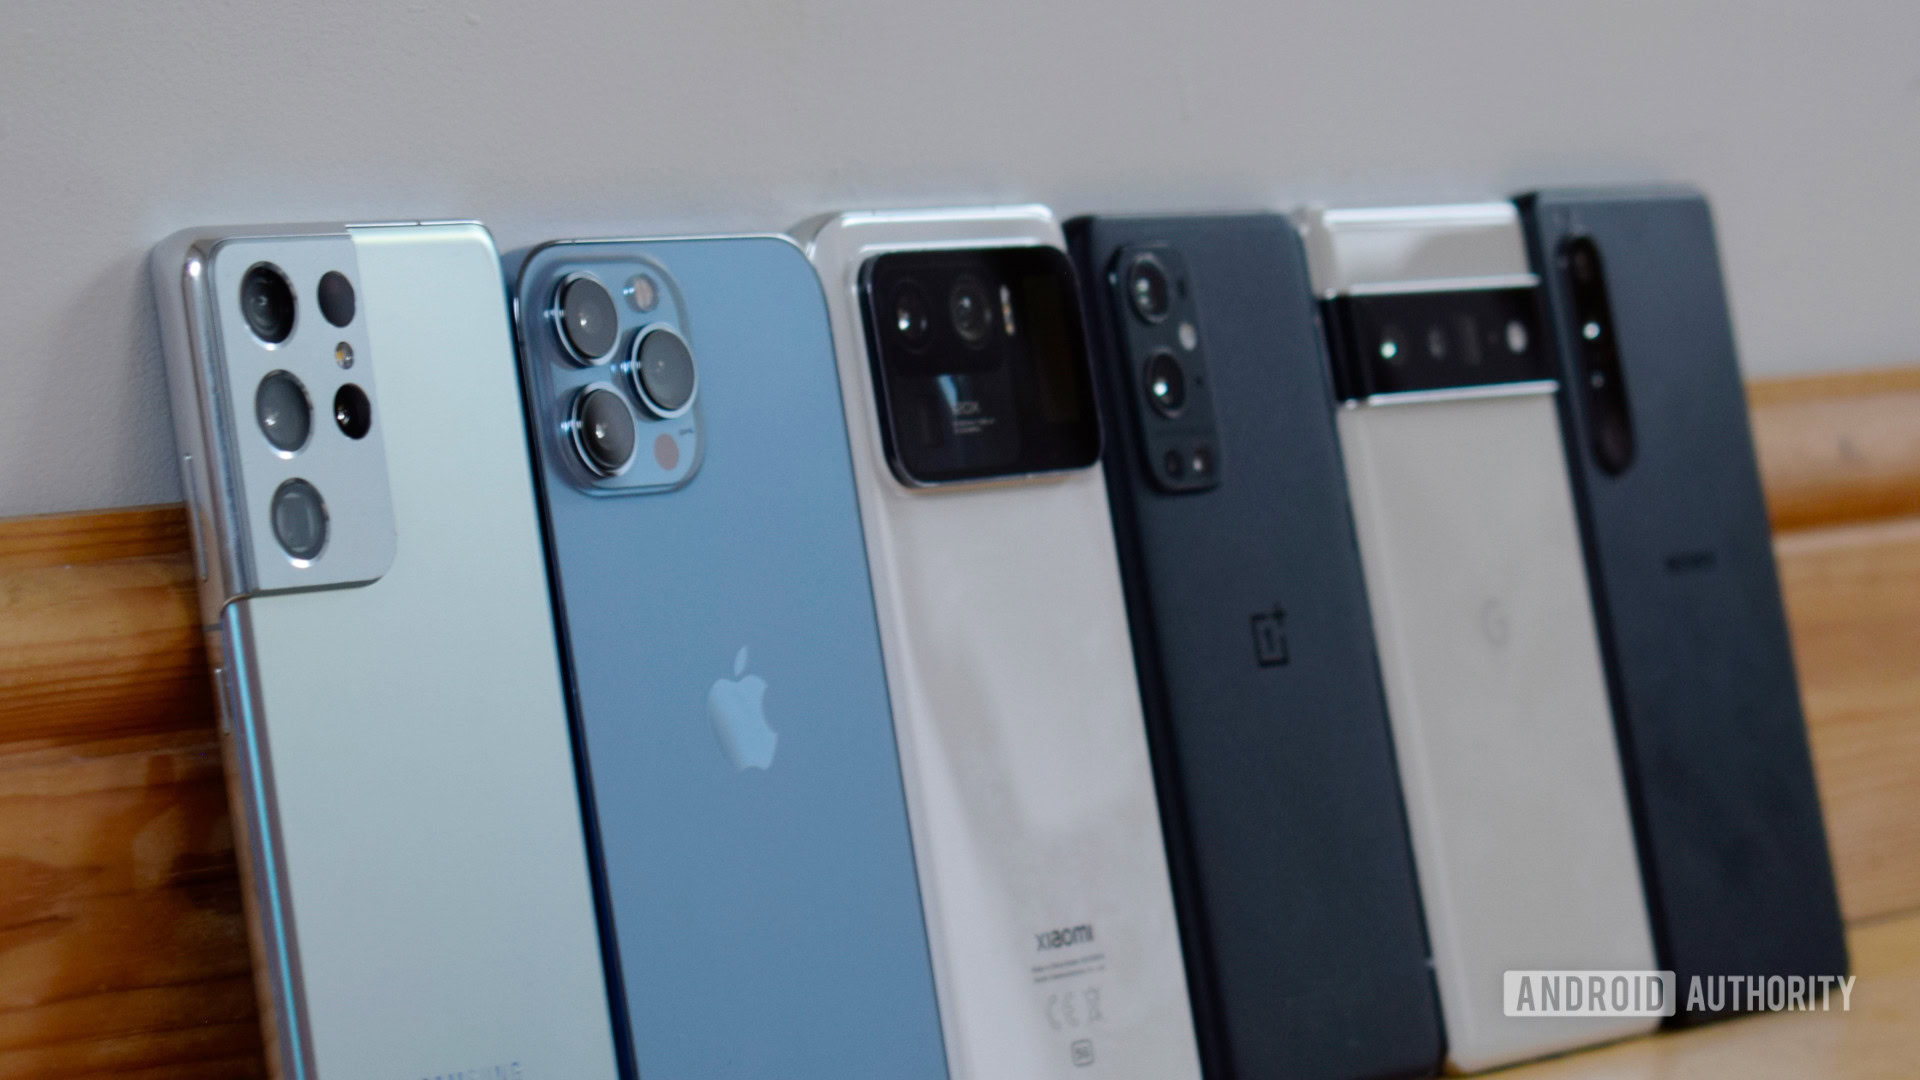 Best 2021 smartphone cameras lined up - Apple iPhone 13 Pro Max, Google Pixel 6 Pro, OnePlus 9 Pro, Samsung Galaxy S21 Ultra, Sony Xperia 1 III, Xiaomi Mi 11 Ultra